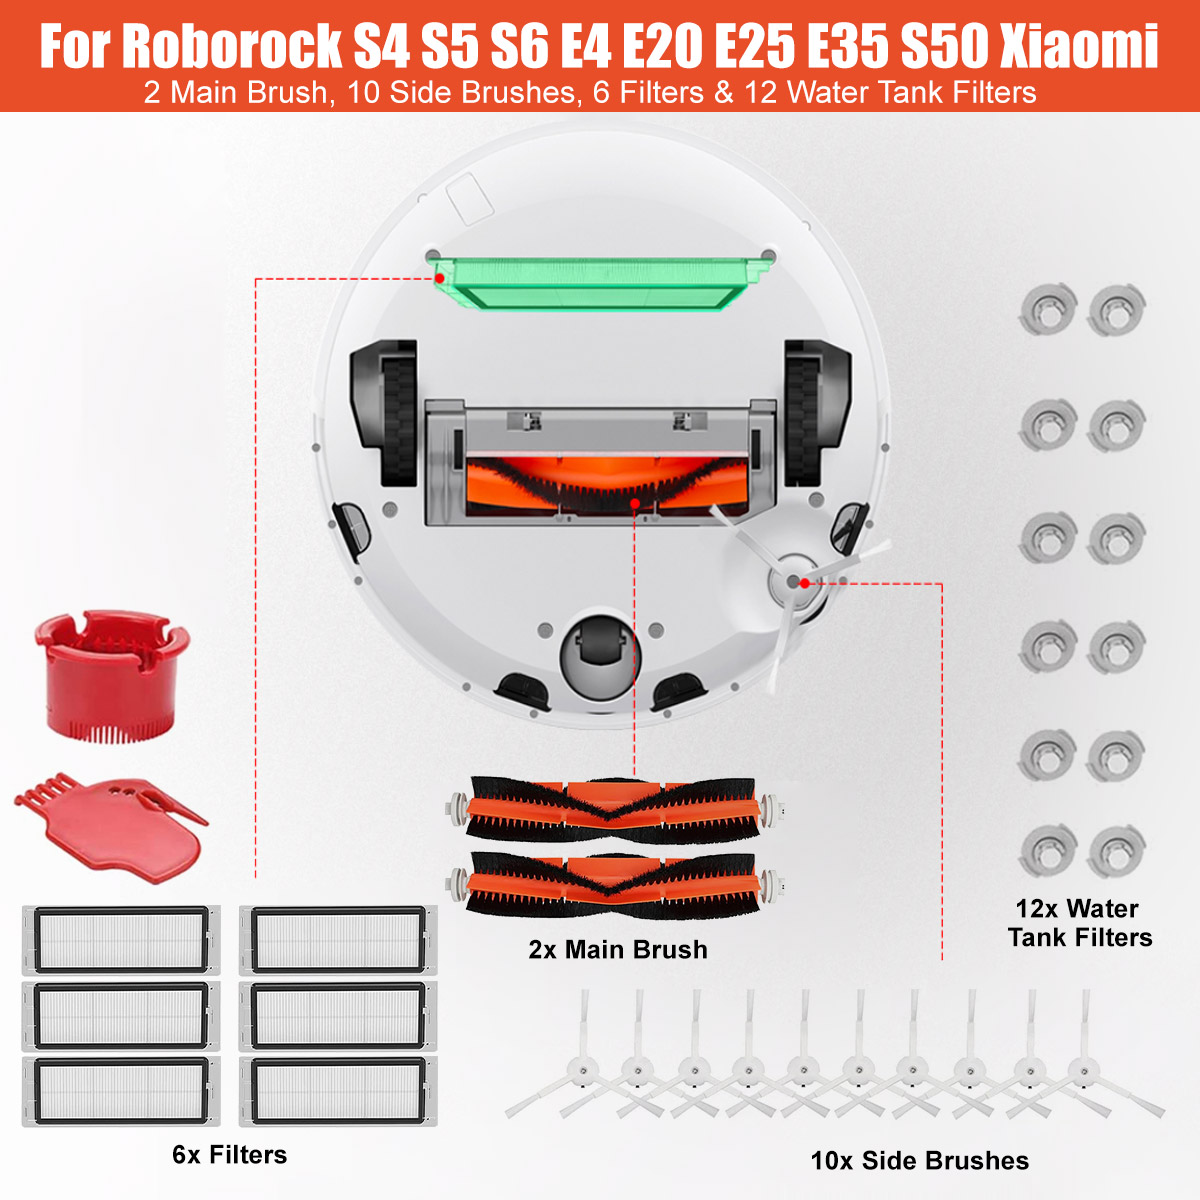 30pcs-Replacements-for-Roborock-S4-S5-S6-E2-E3-E4-E20-E25-E35-S50-S65-Robot-Vacuum-Cleaner-Main-Brus-1944162-2